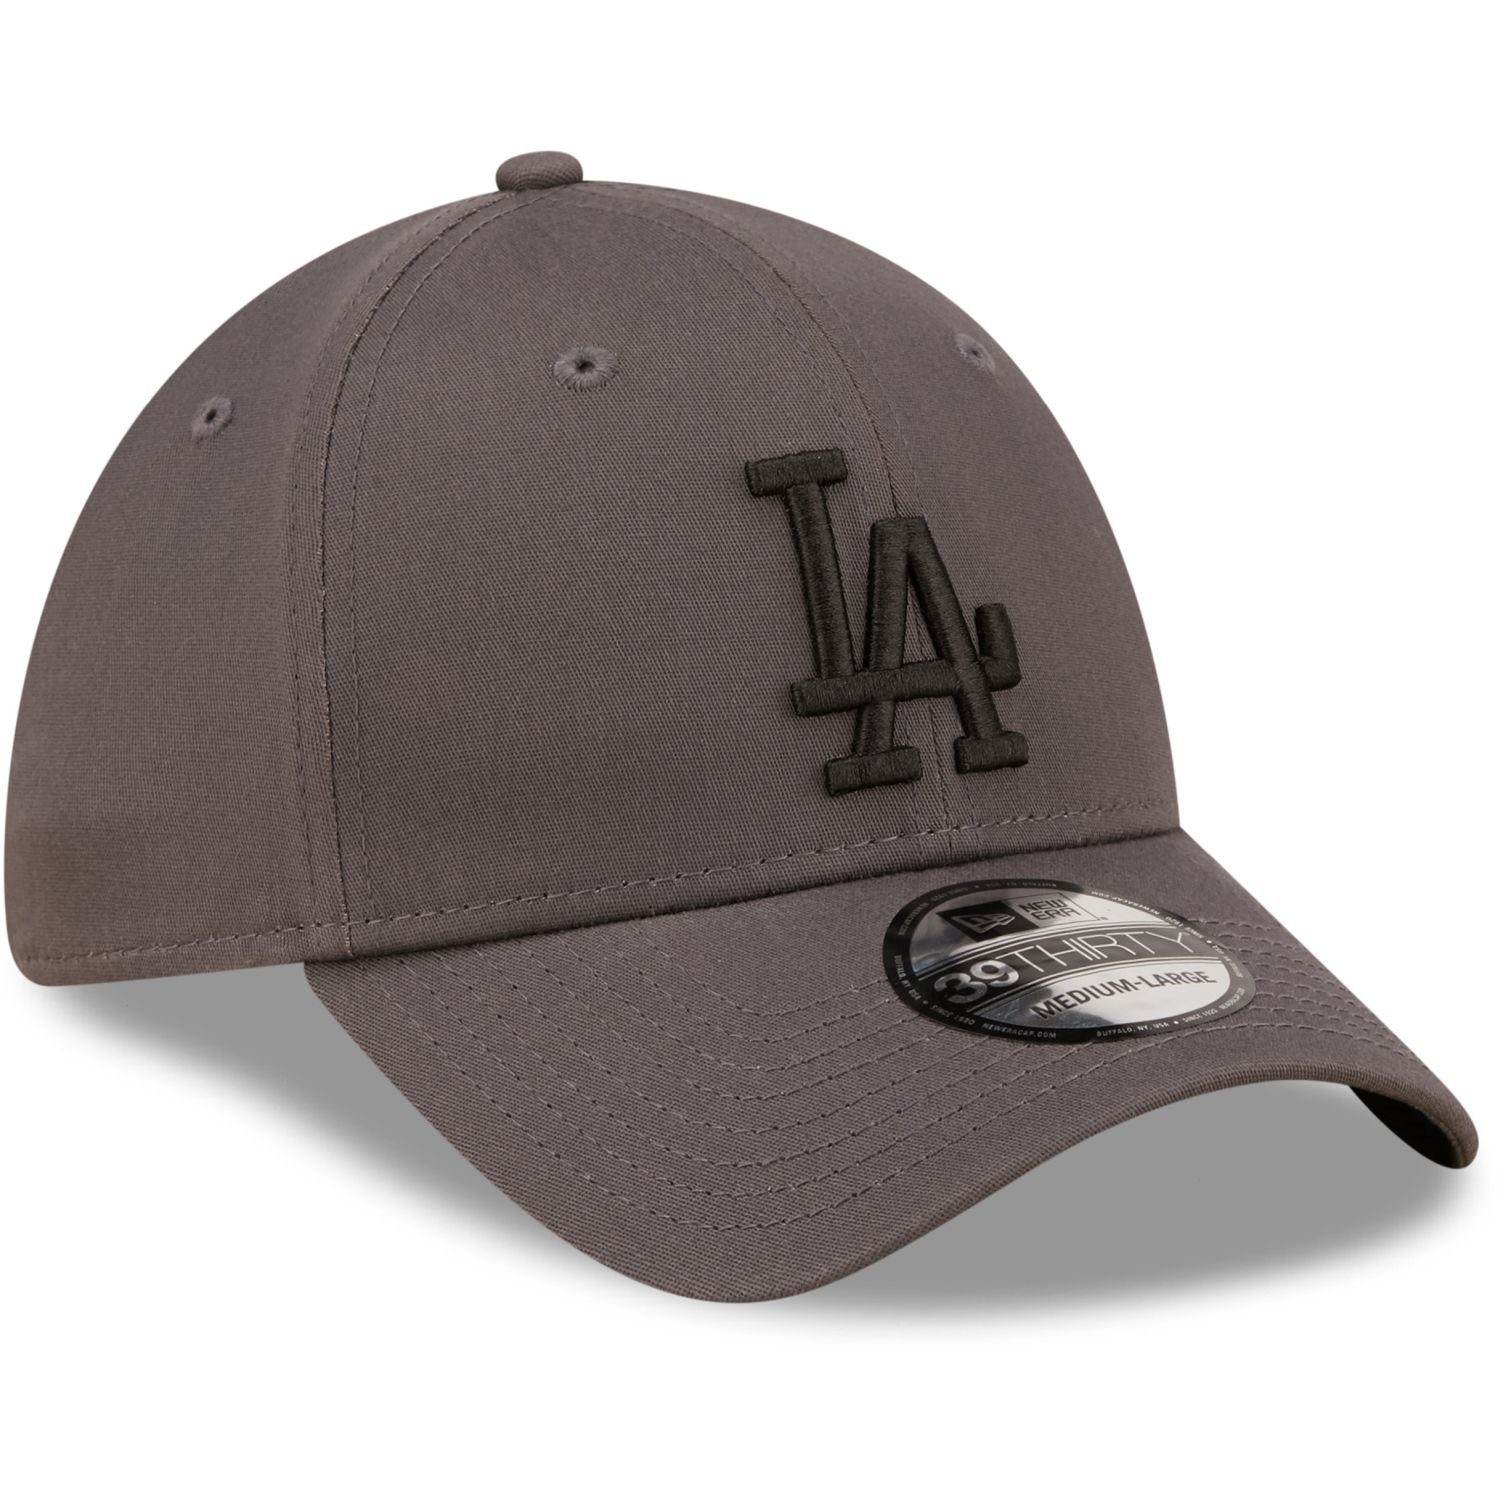 New Era Flex Cap Angeles grey Stretch Dodgers Los 39Thirty